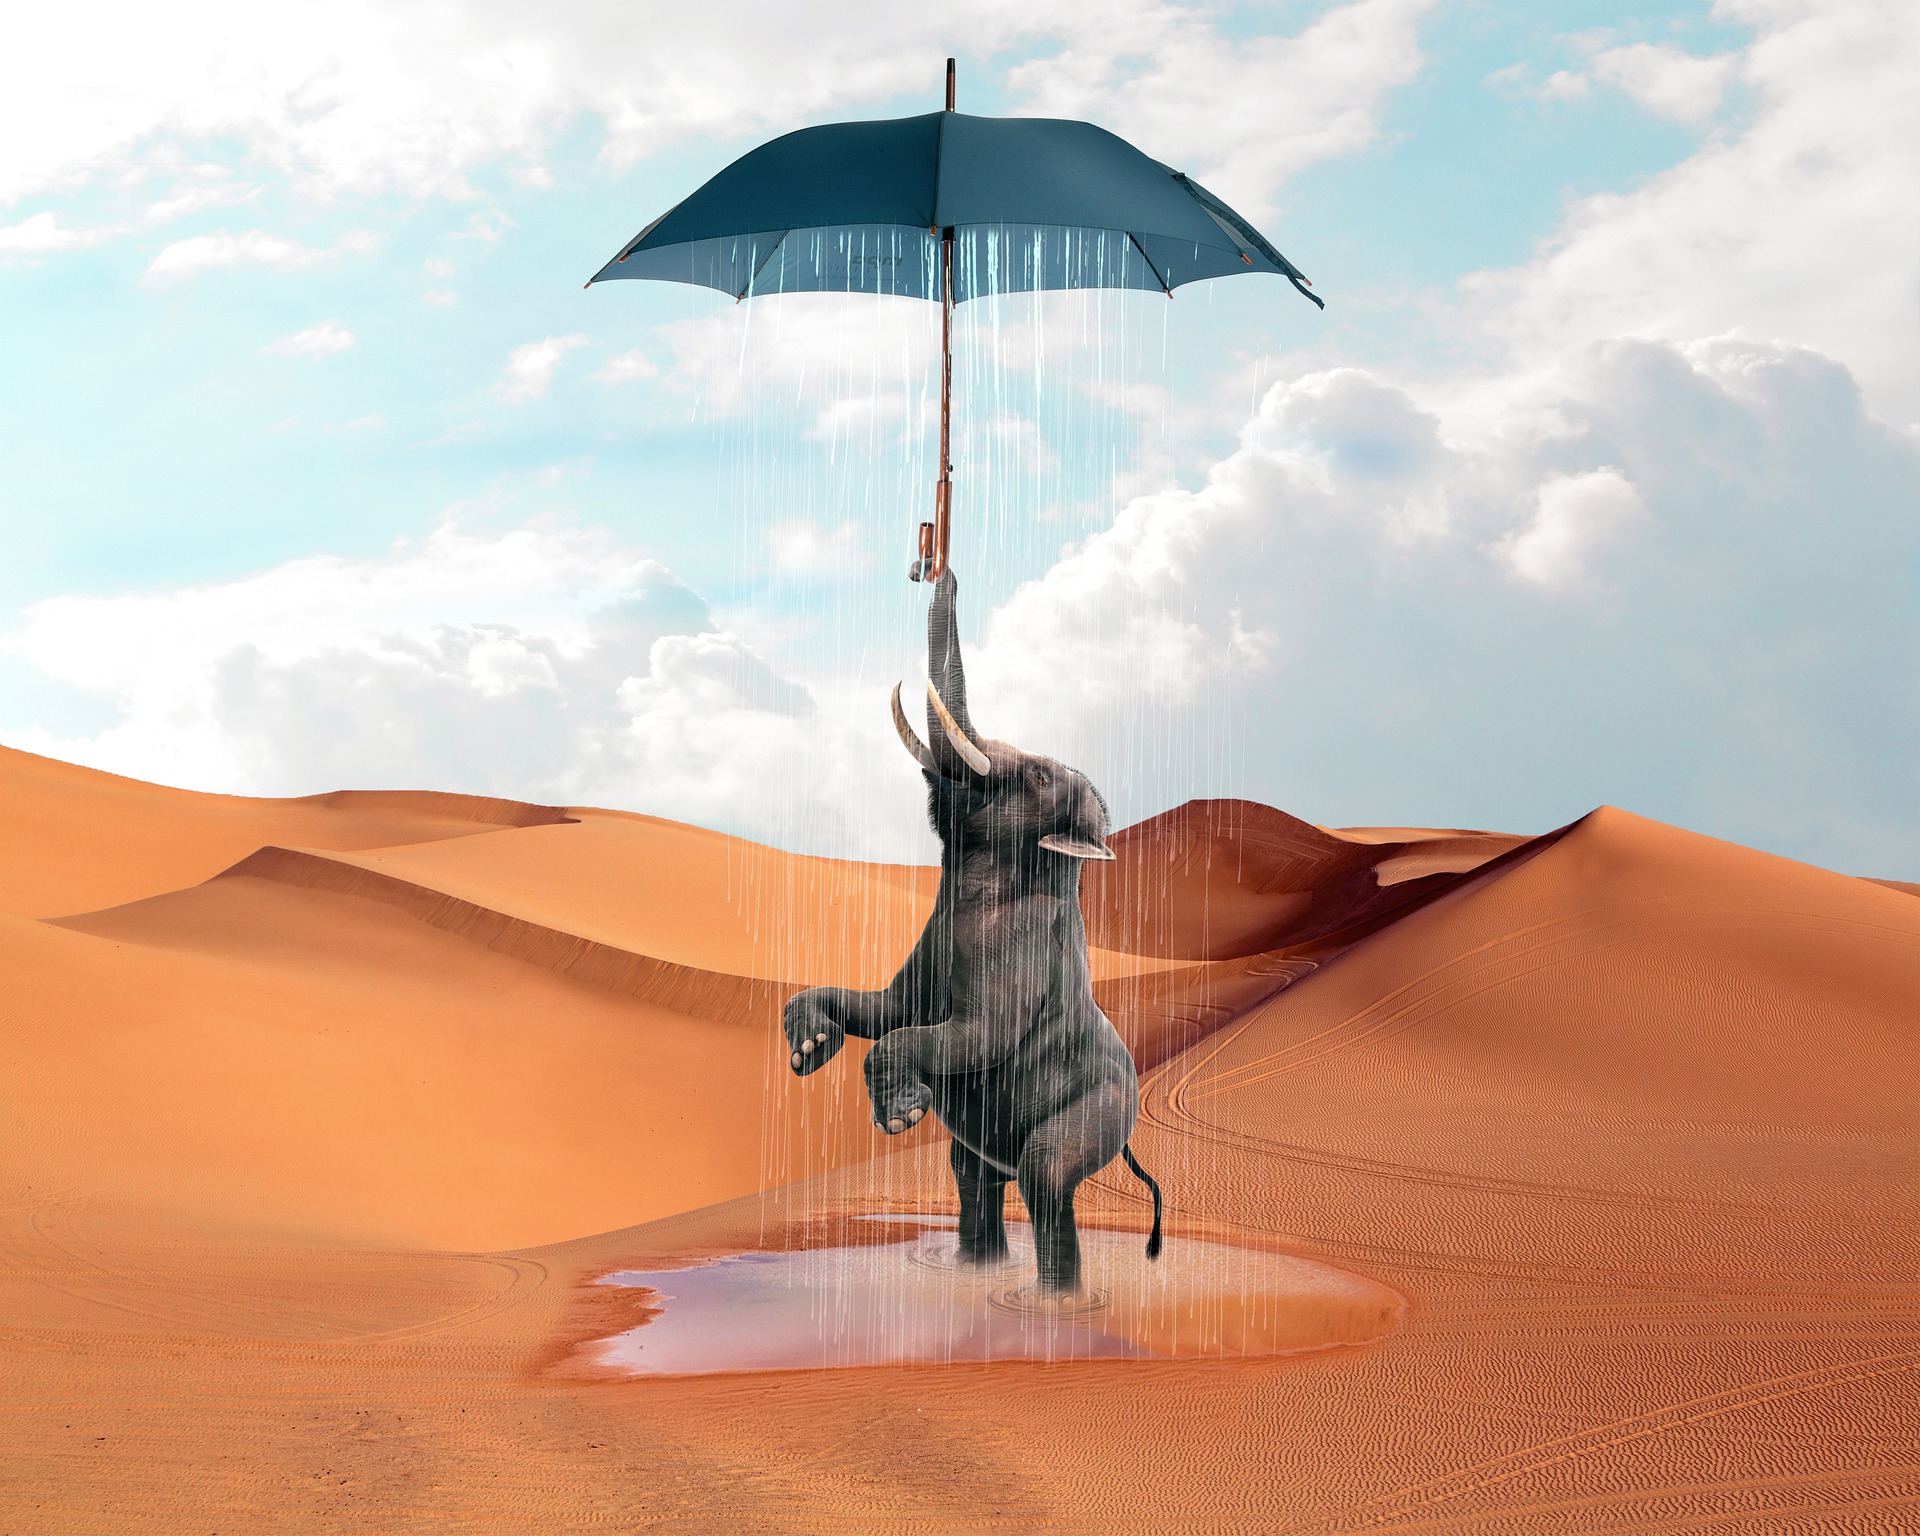 Elephant Holding an Umbrella Raining down on him in the Desert by Дмитрий Бирюков